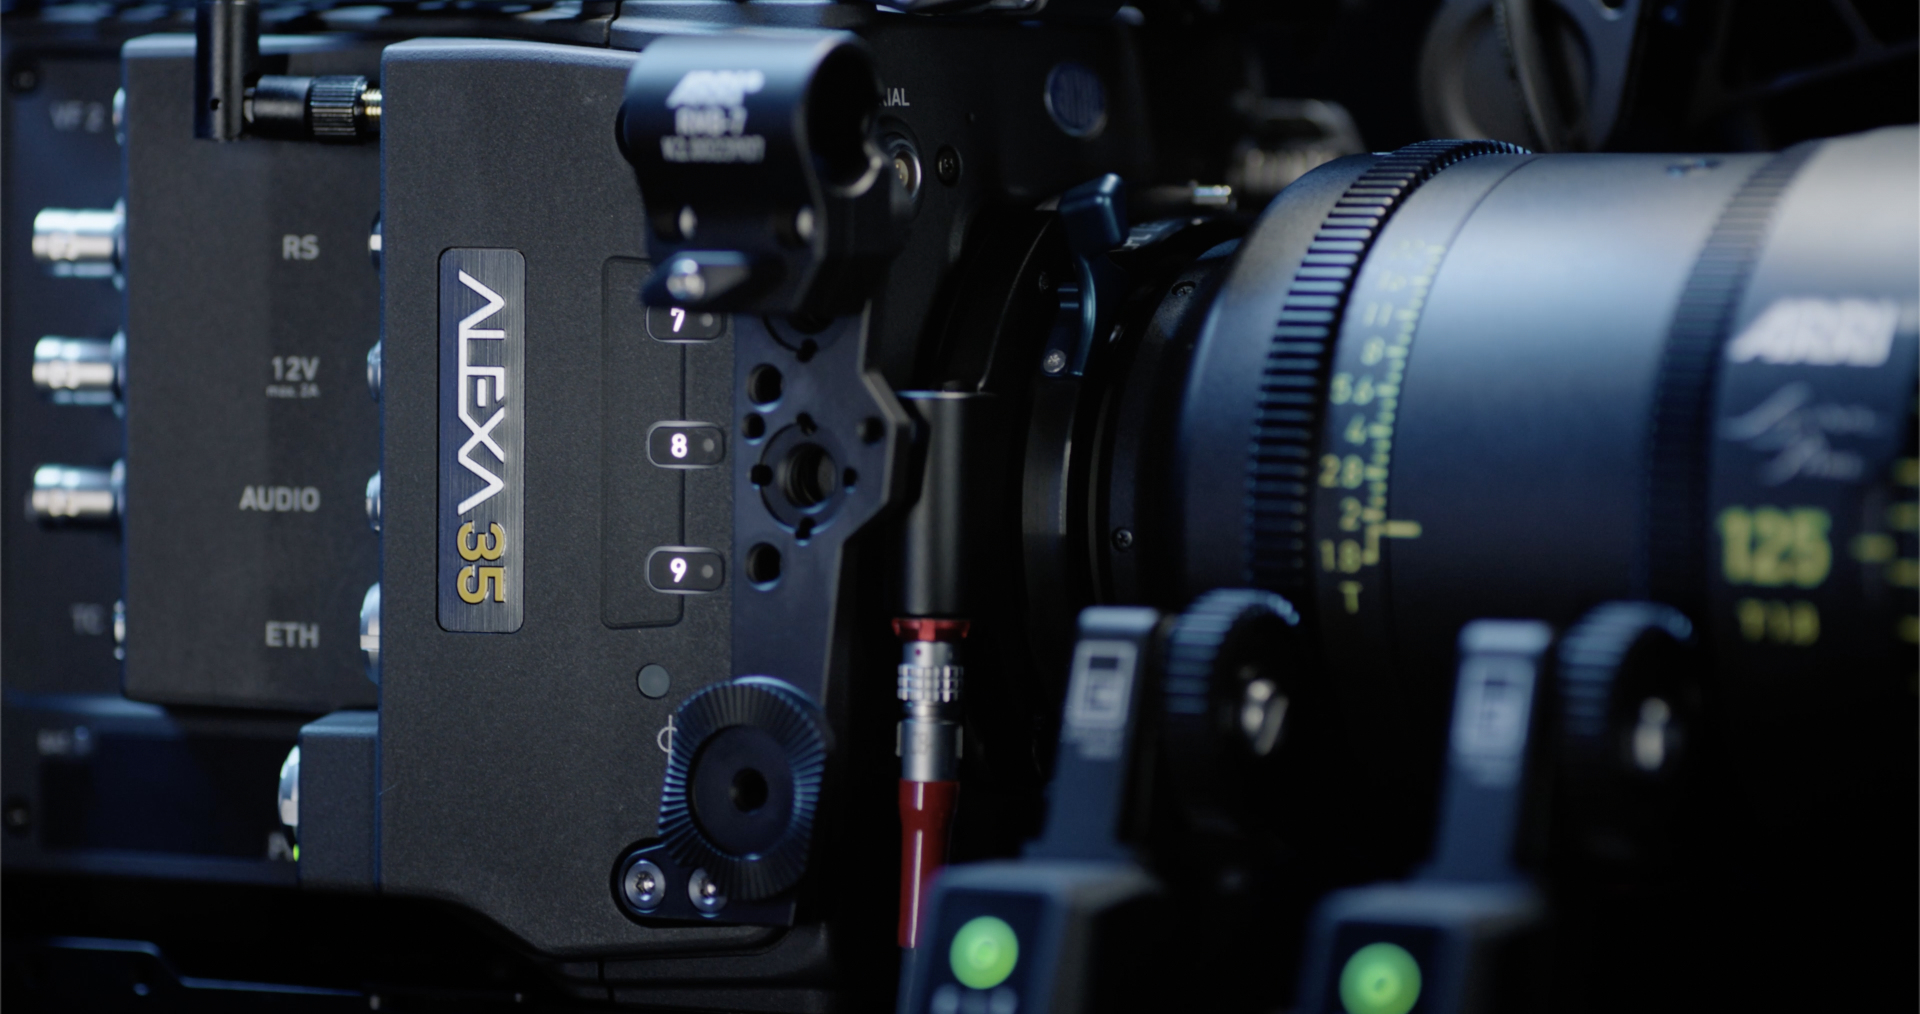 Arri Alexa Plus digital cinematography professionnal camera Stock